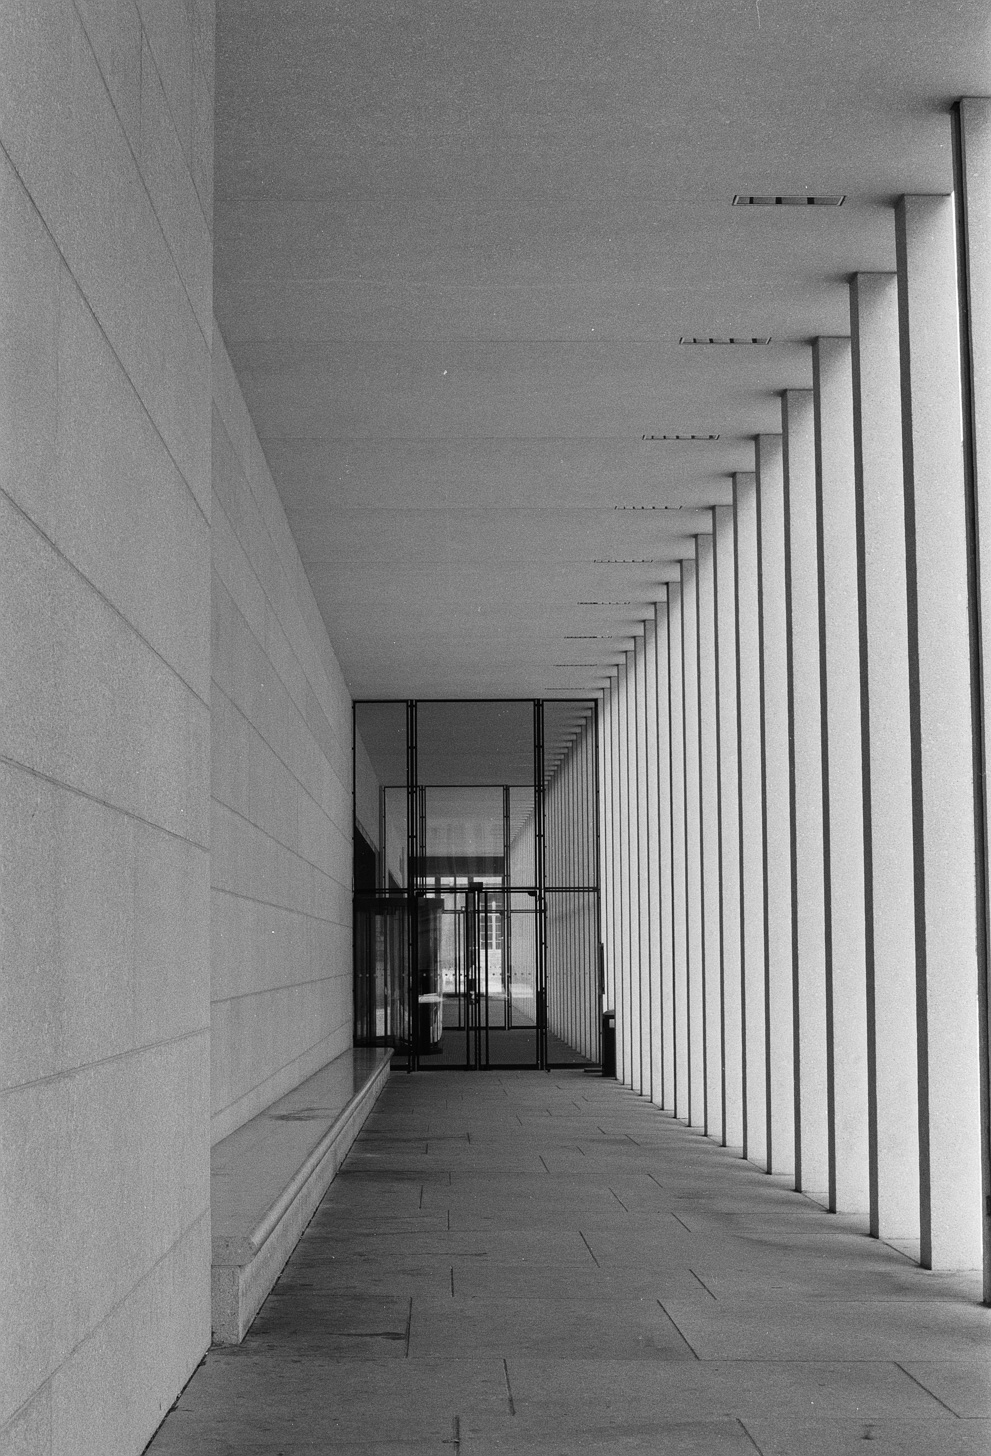 Pillars of the James Simon Gallery in Berlin. Shot on Kodak Tmax 100.